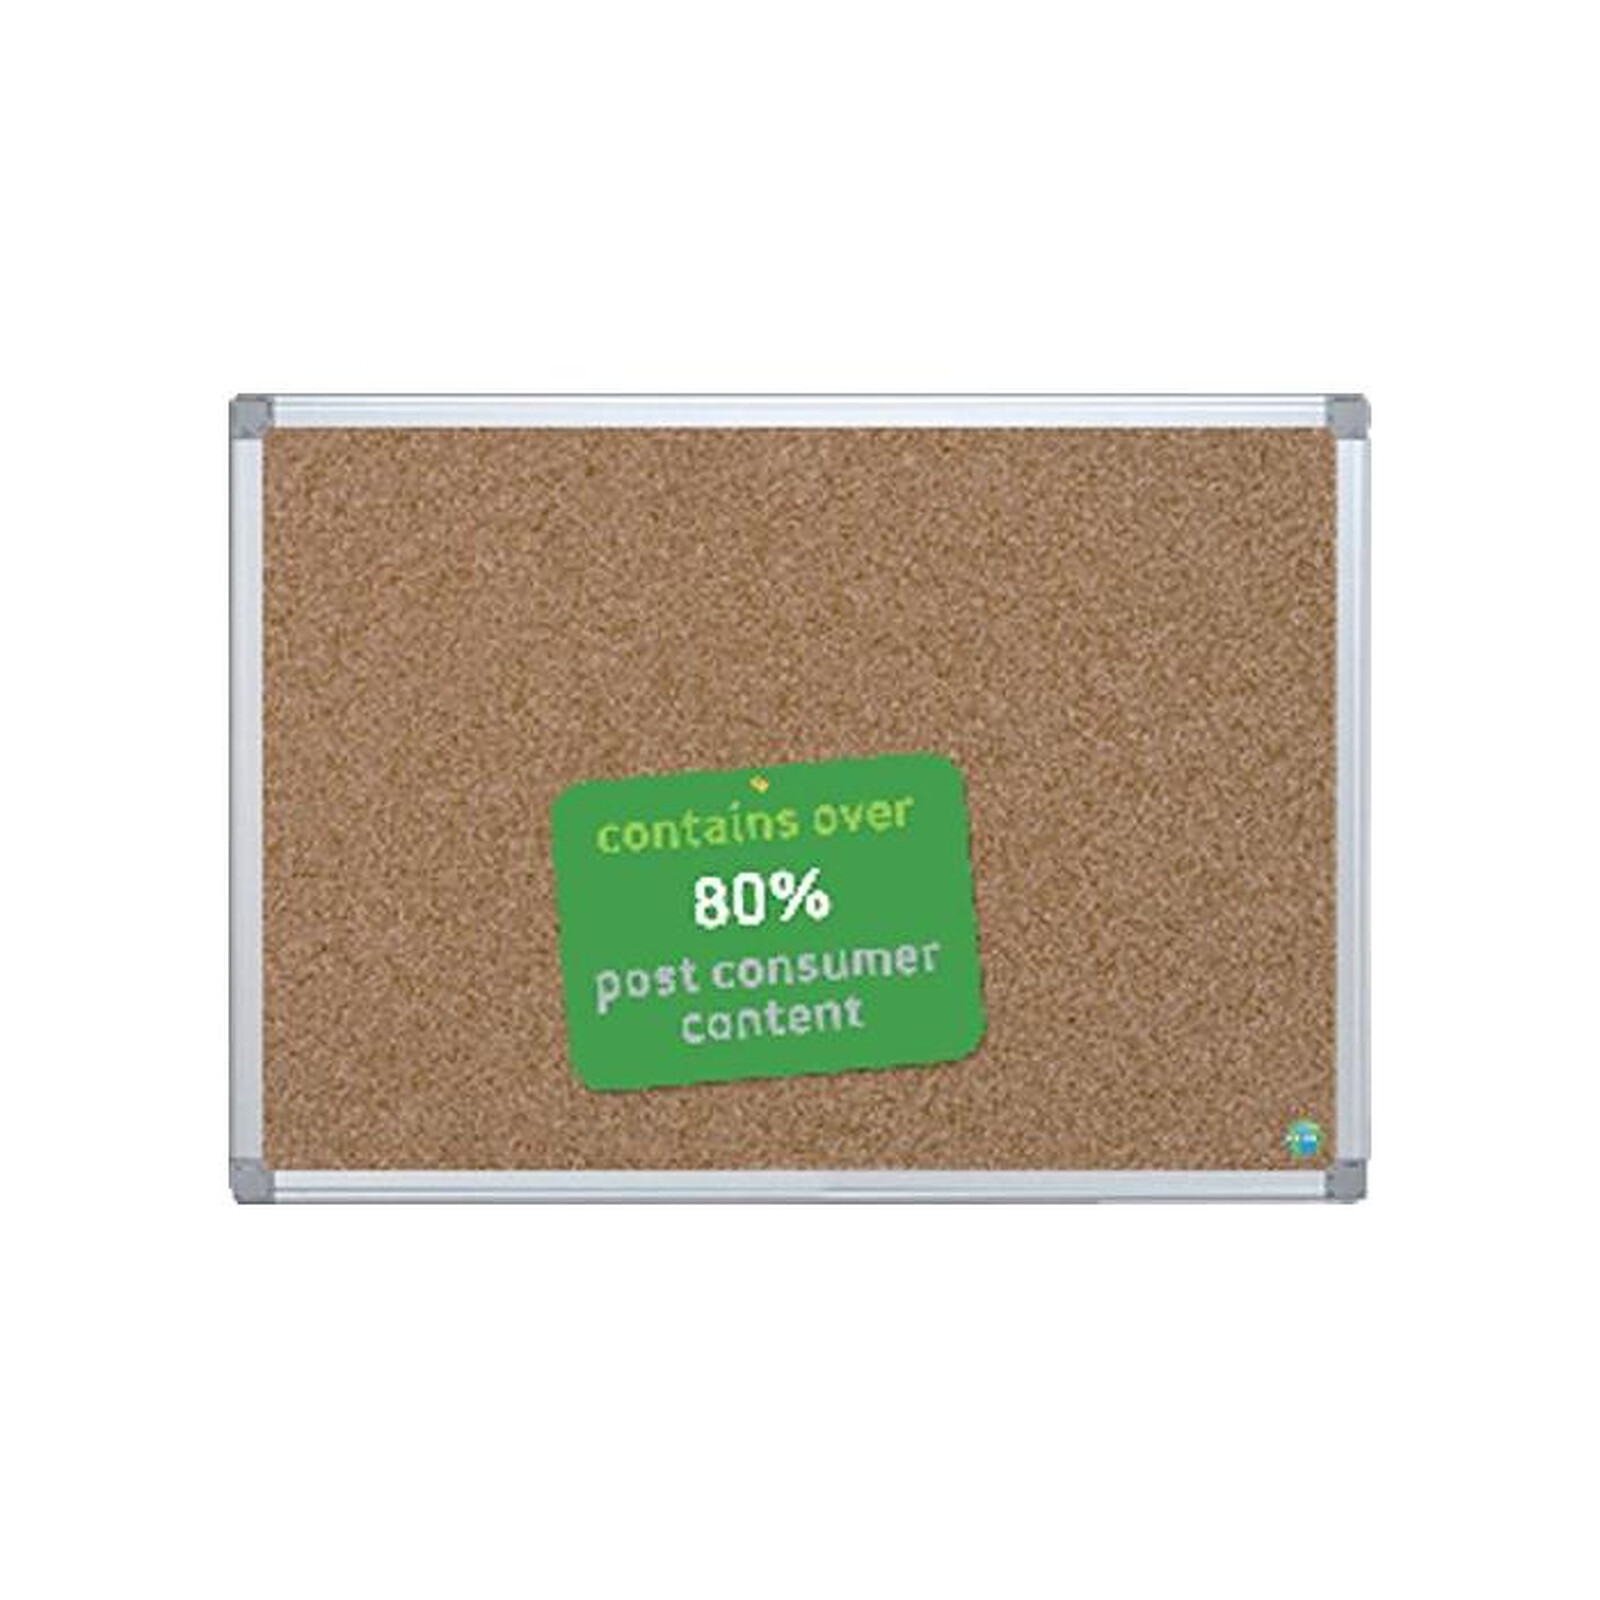 BI-OFFICE Tableau liège recyclable cadre alu 100 x 150 cm - Vitrine et  affichage - LDLC